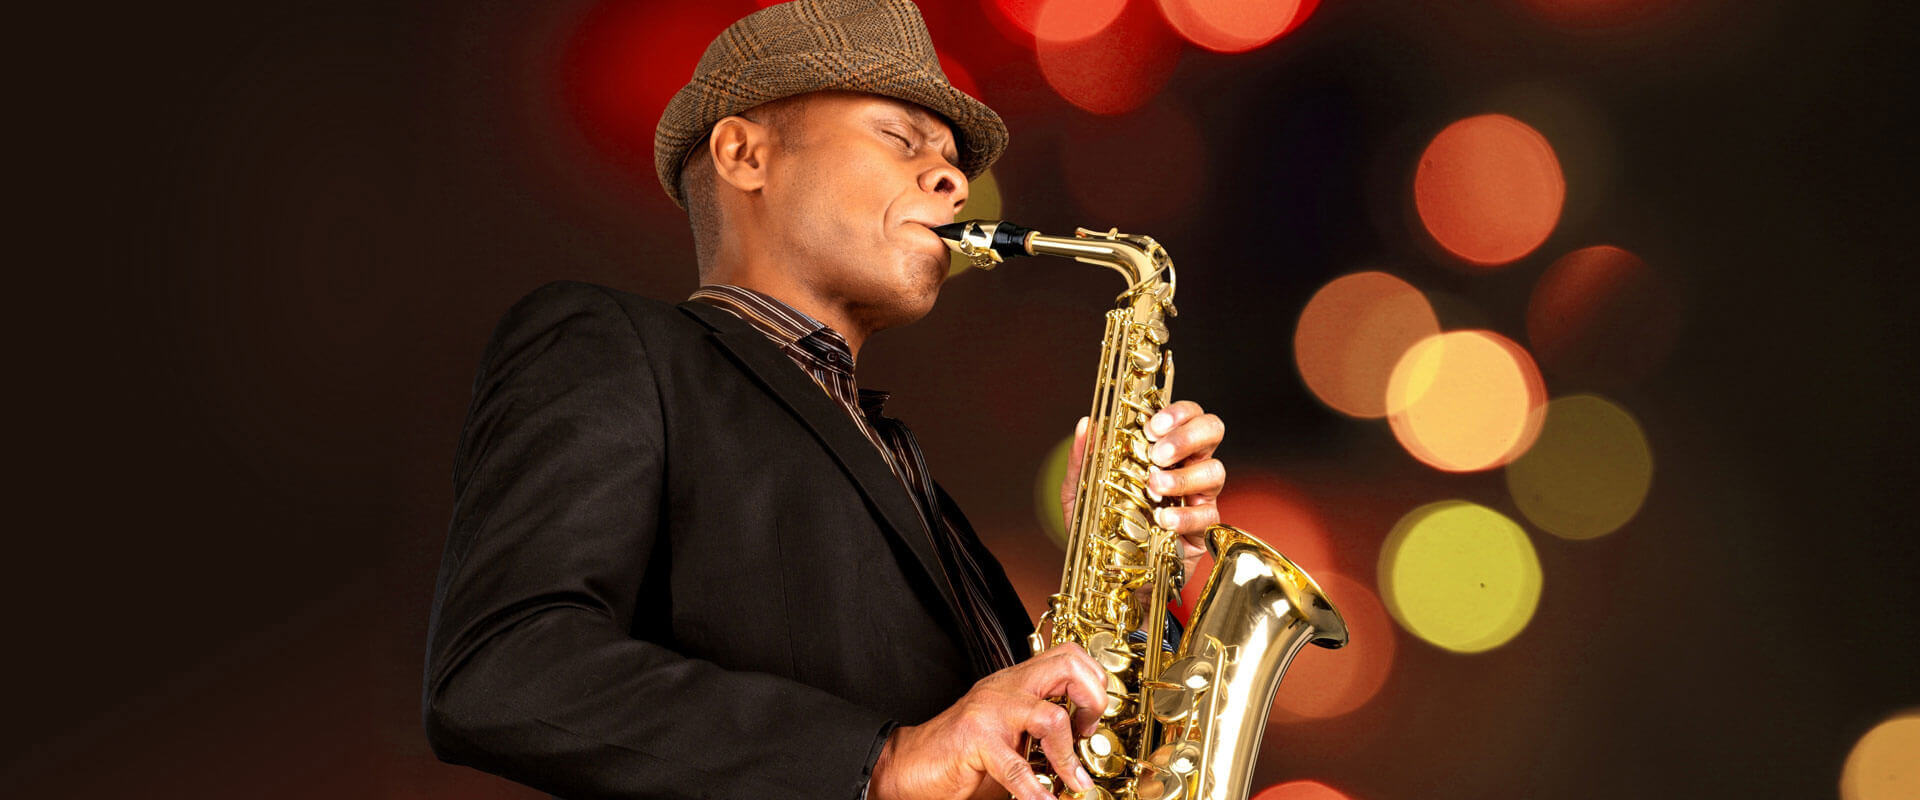 Saxophone Lessons Burton, WA